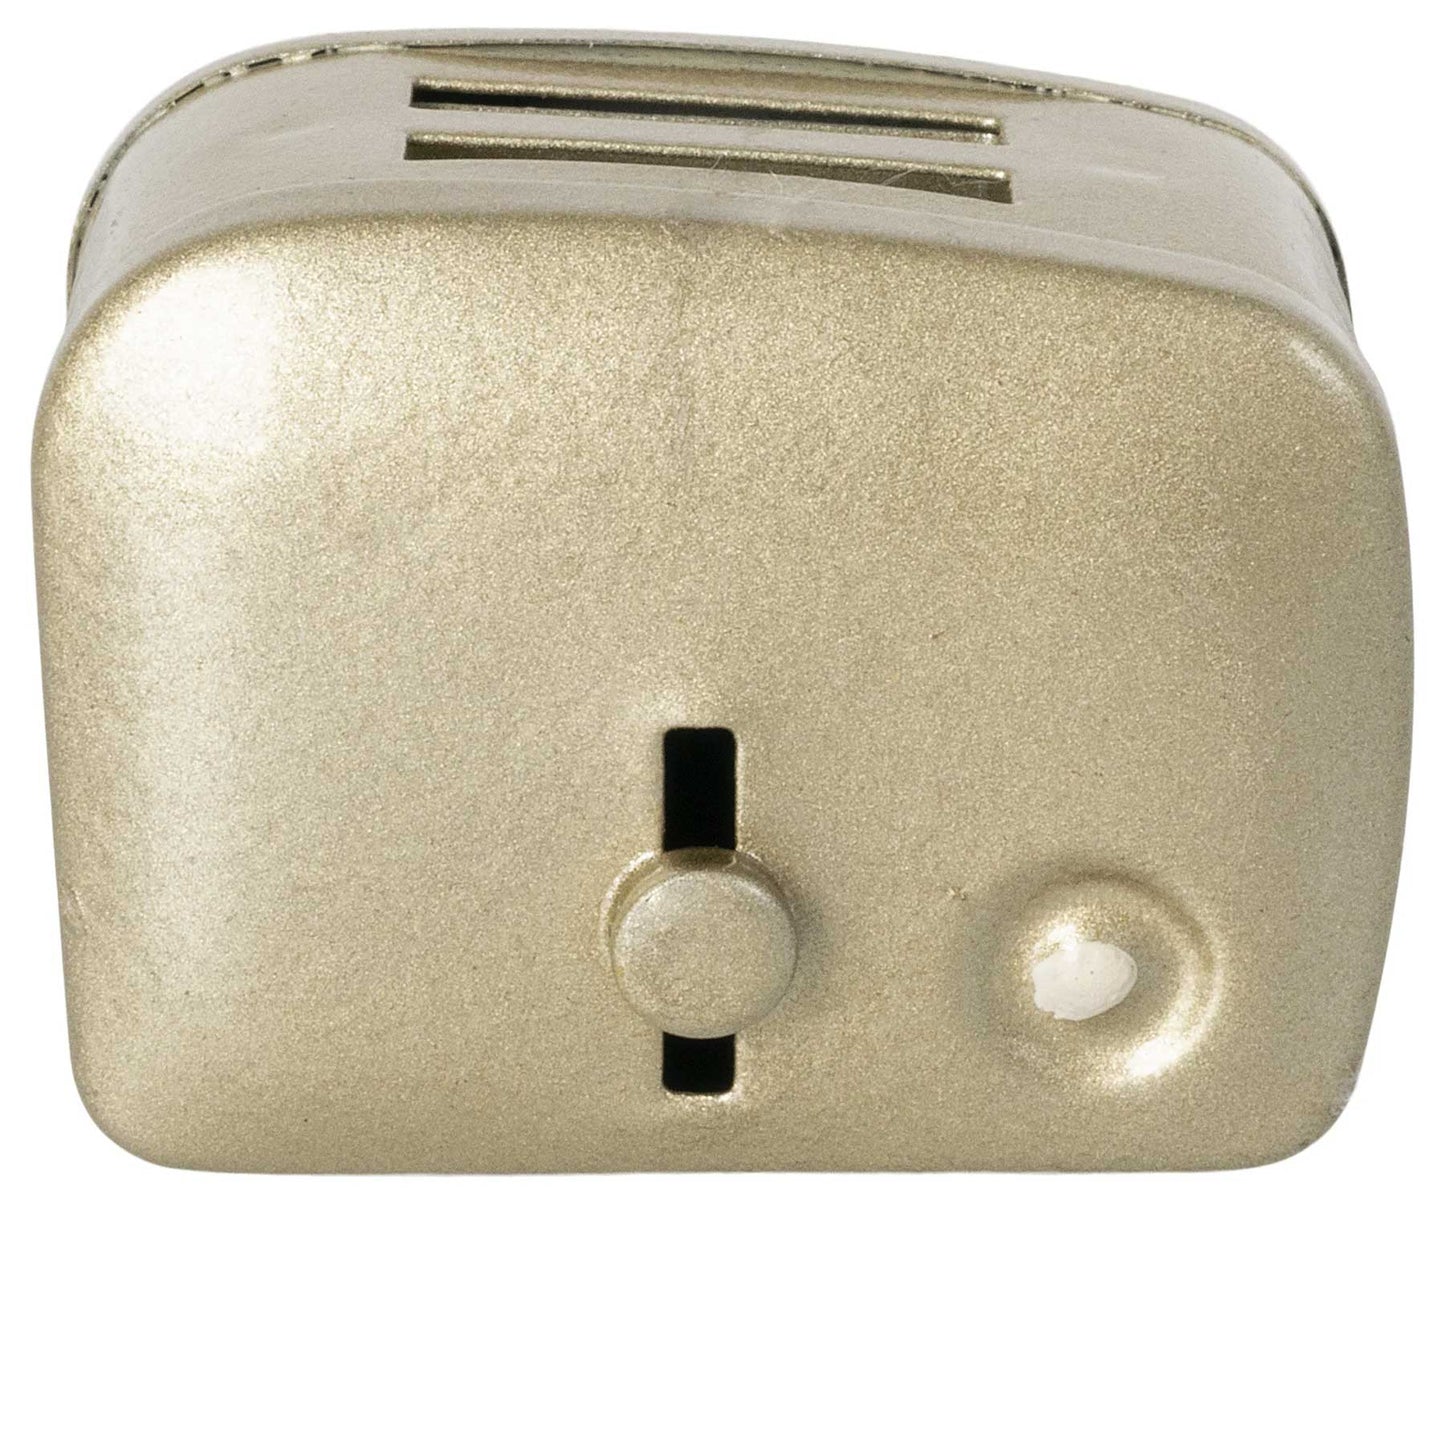 Maileg Miniature Silver Toaster